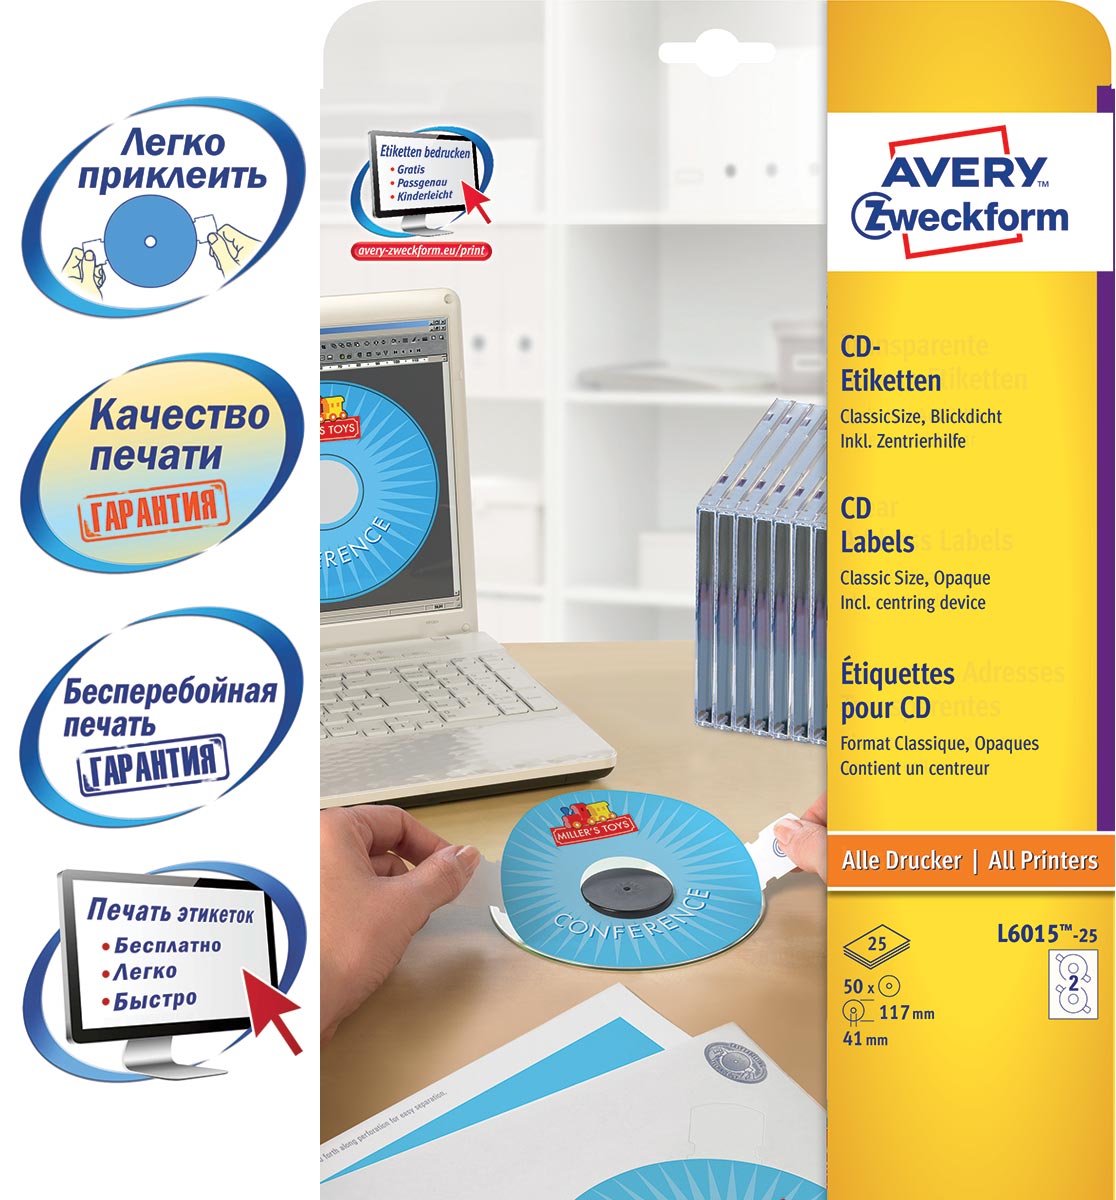 Этикетки Avery Zweckform IJ+L+K+CL д/CD/DVD, d=117мм, втулка 41мм, матовые, белые, 2шт/л, 25л/уп 6015-25